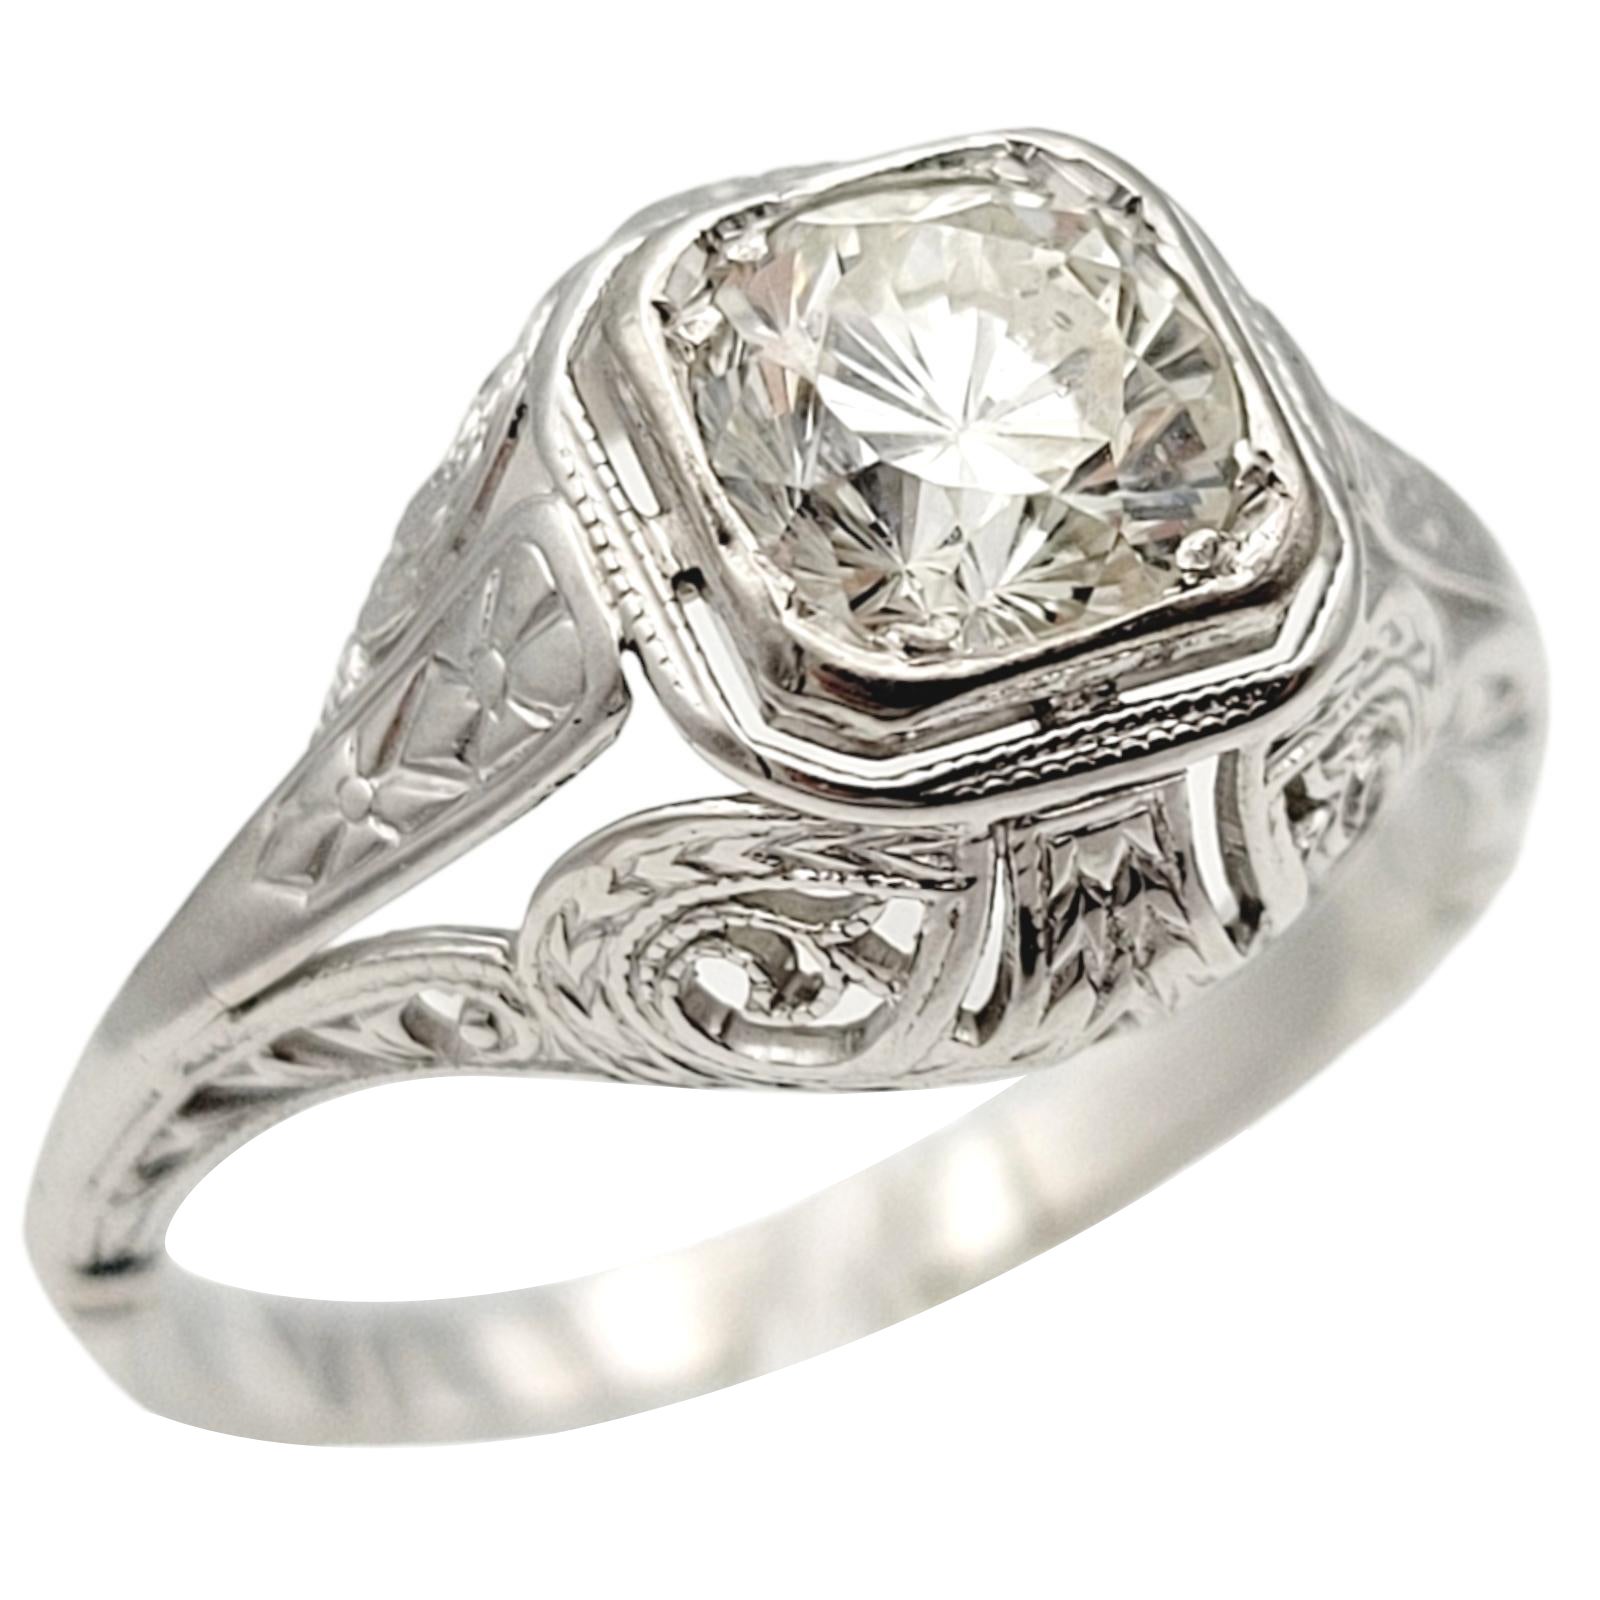 Vintage 0.83 Carat Solitaire Diamond Engagement Ring in 14 Karat White Gold